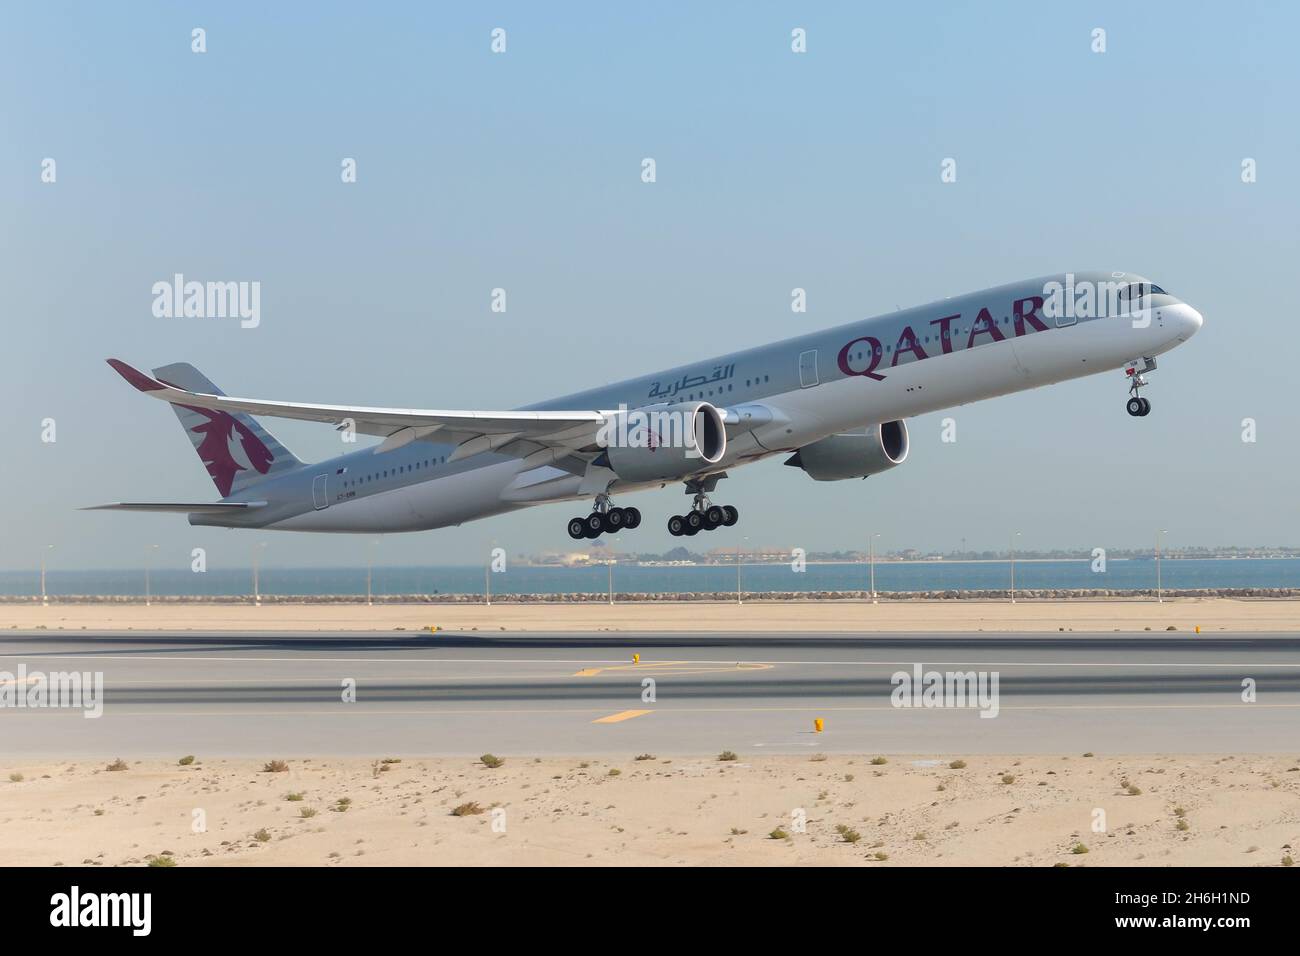 Qatar Airways Airbus A350 aircraft taking off from Doha Hamad International Airport in Qatar, the hub of Qatar Airways. Airplane departure. Stock Photo